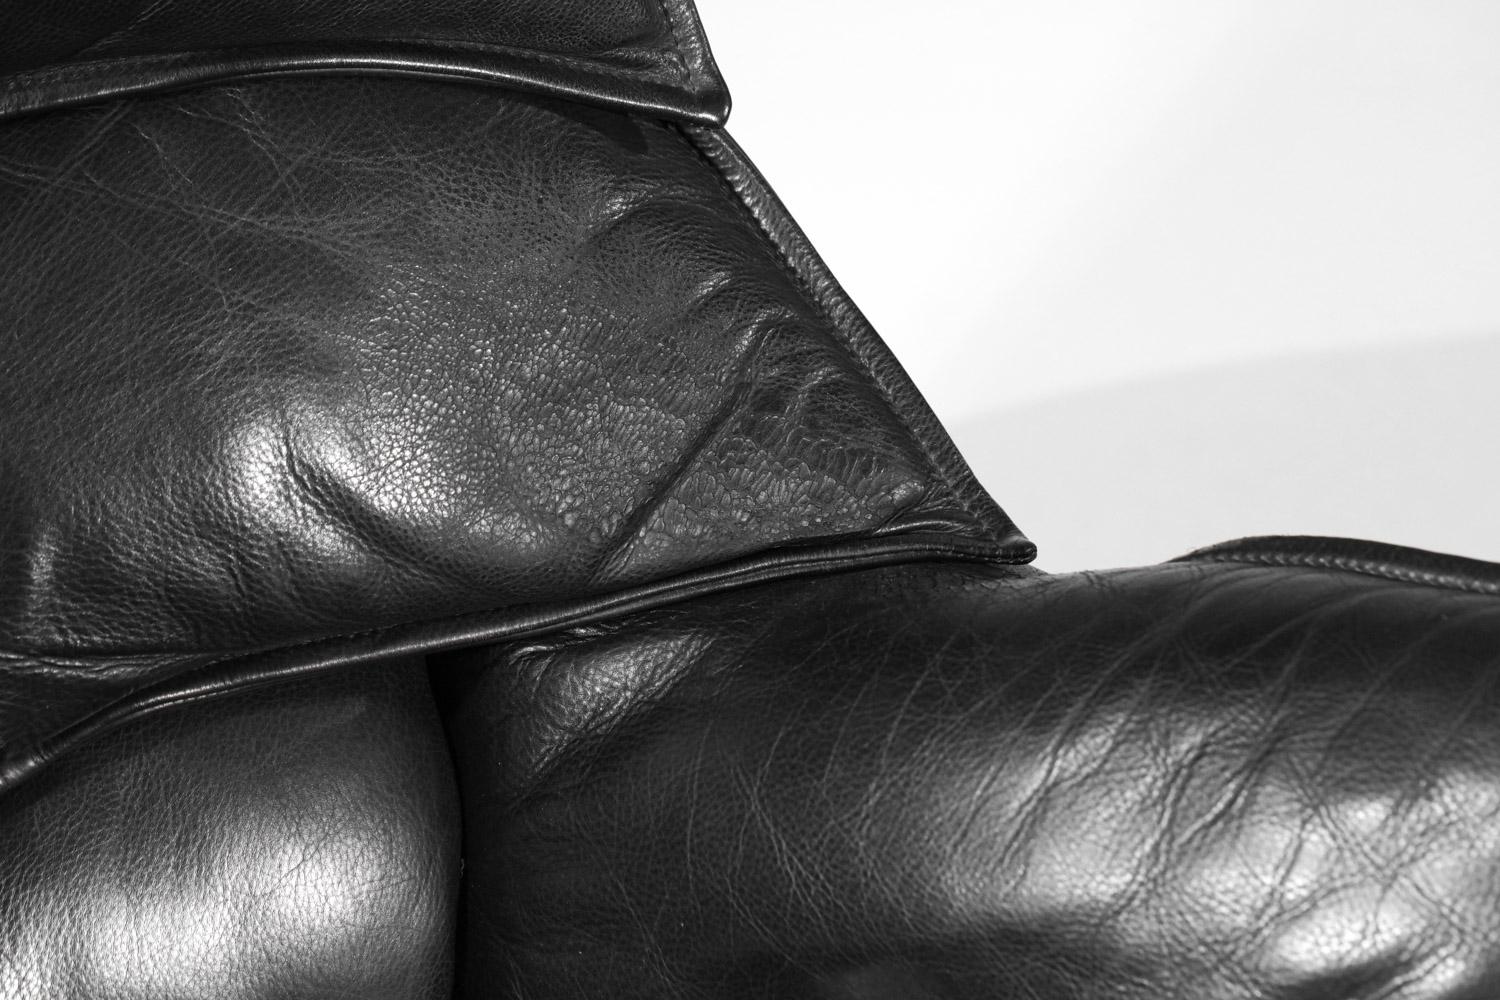 Großer Sessel und Fußstütze aus schwarzem Leder Bernard Massot, Bernard Massot, Jahre 70/80 (Postmoderne)